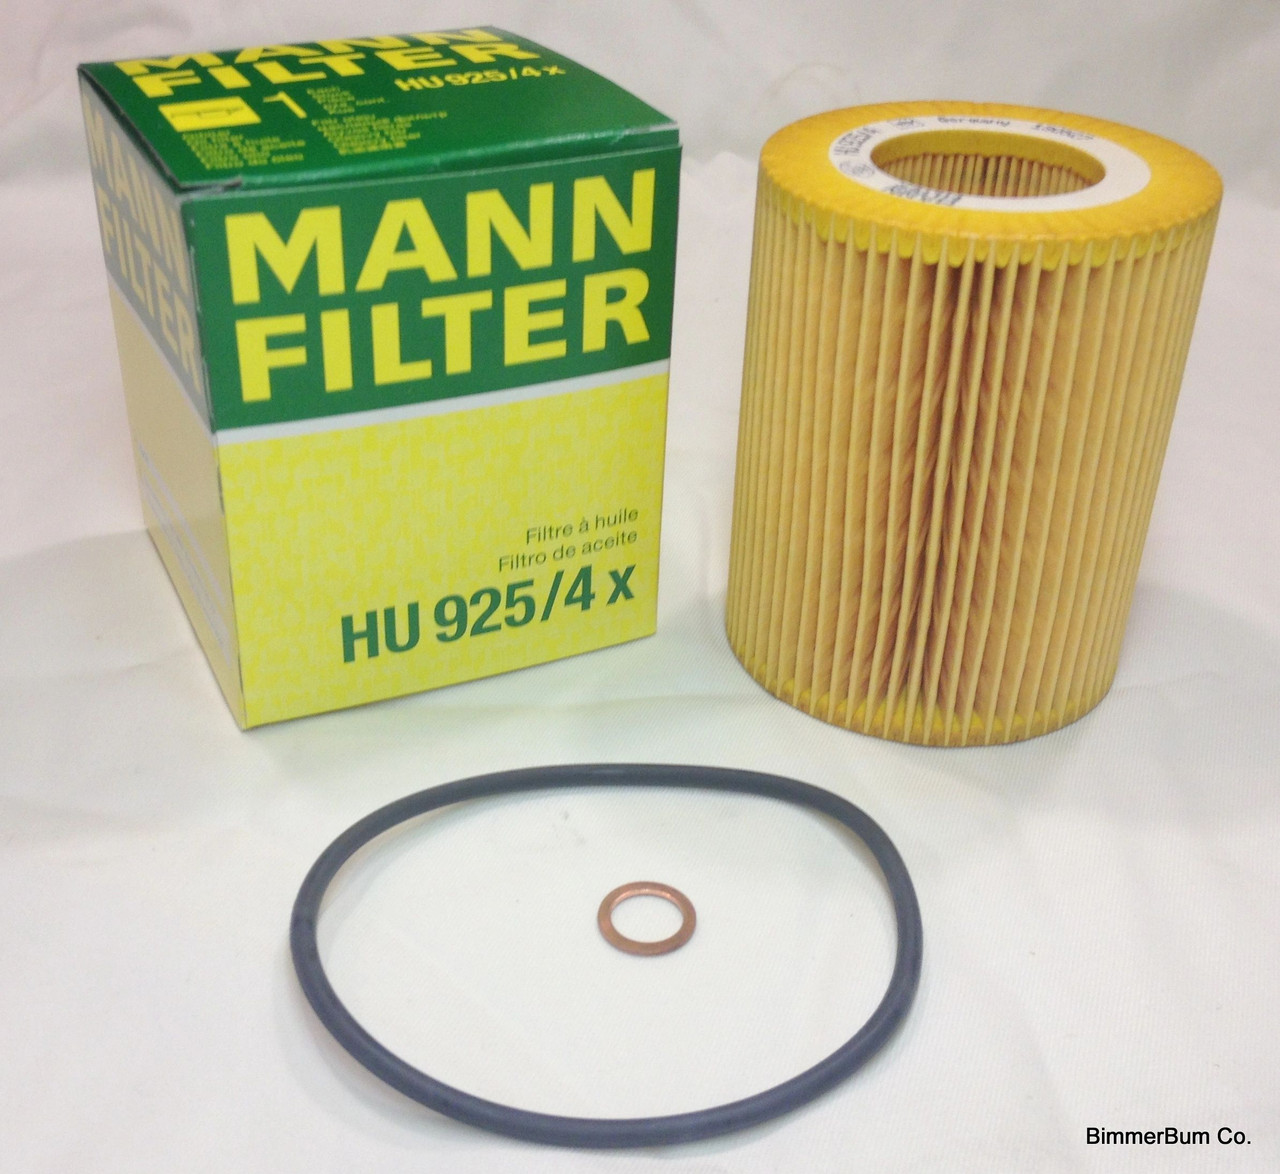 MANN-FILTER マンフィルター オイルフィルター BMW Z3 CK28 M52B (純正品番:11 42 7 512 300) HU925/4X